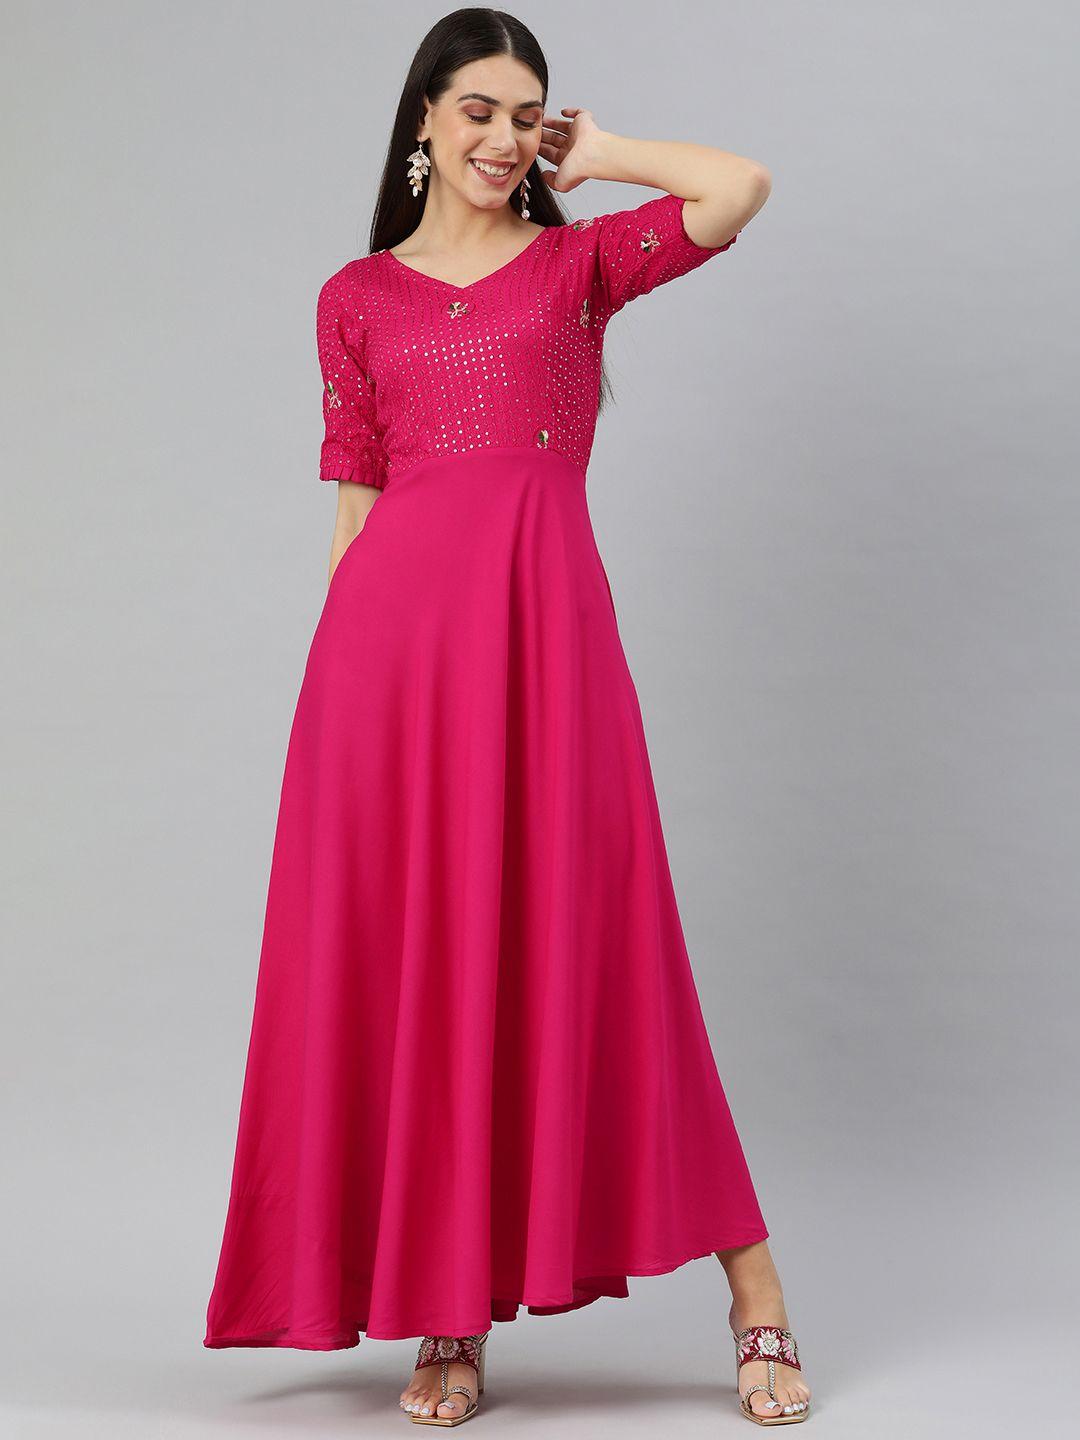 swishchick women pink sequined maxi dress